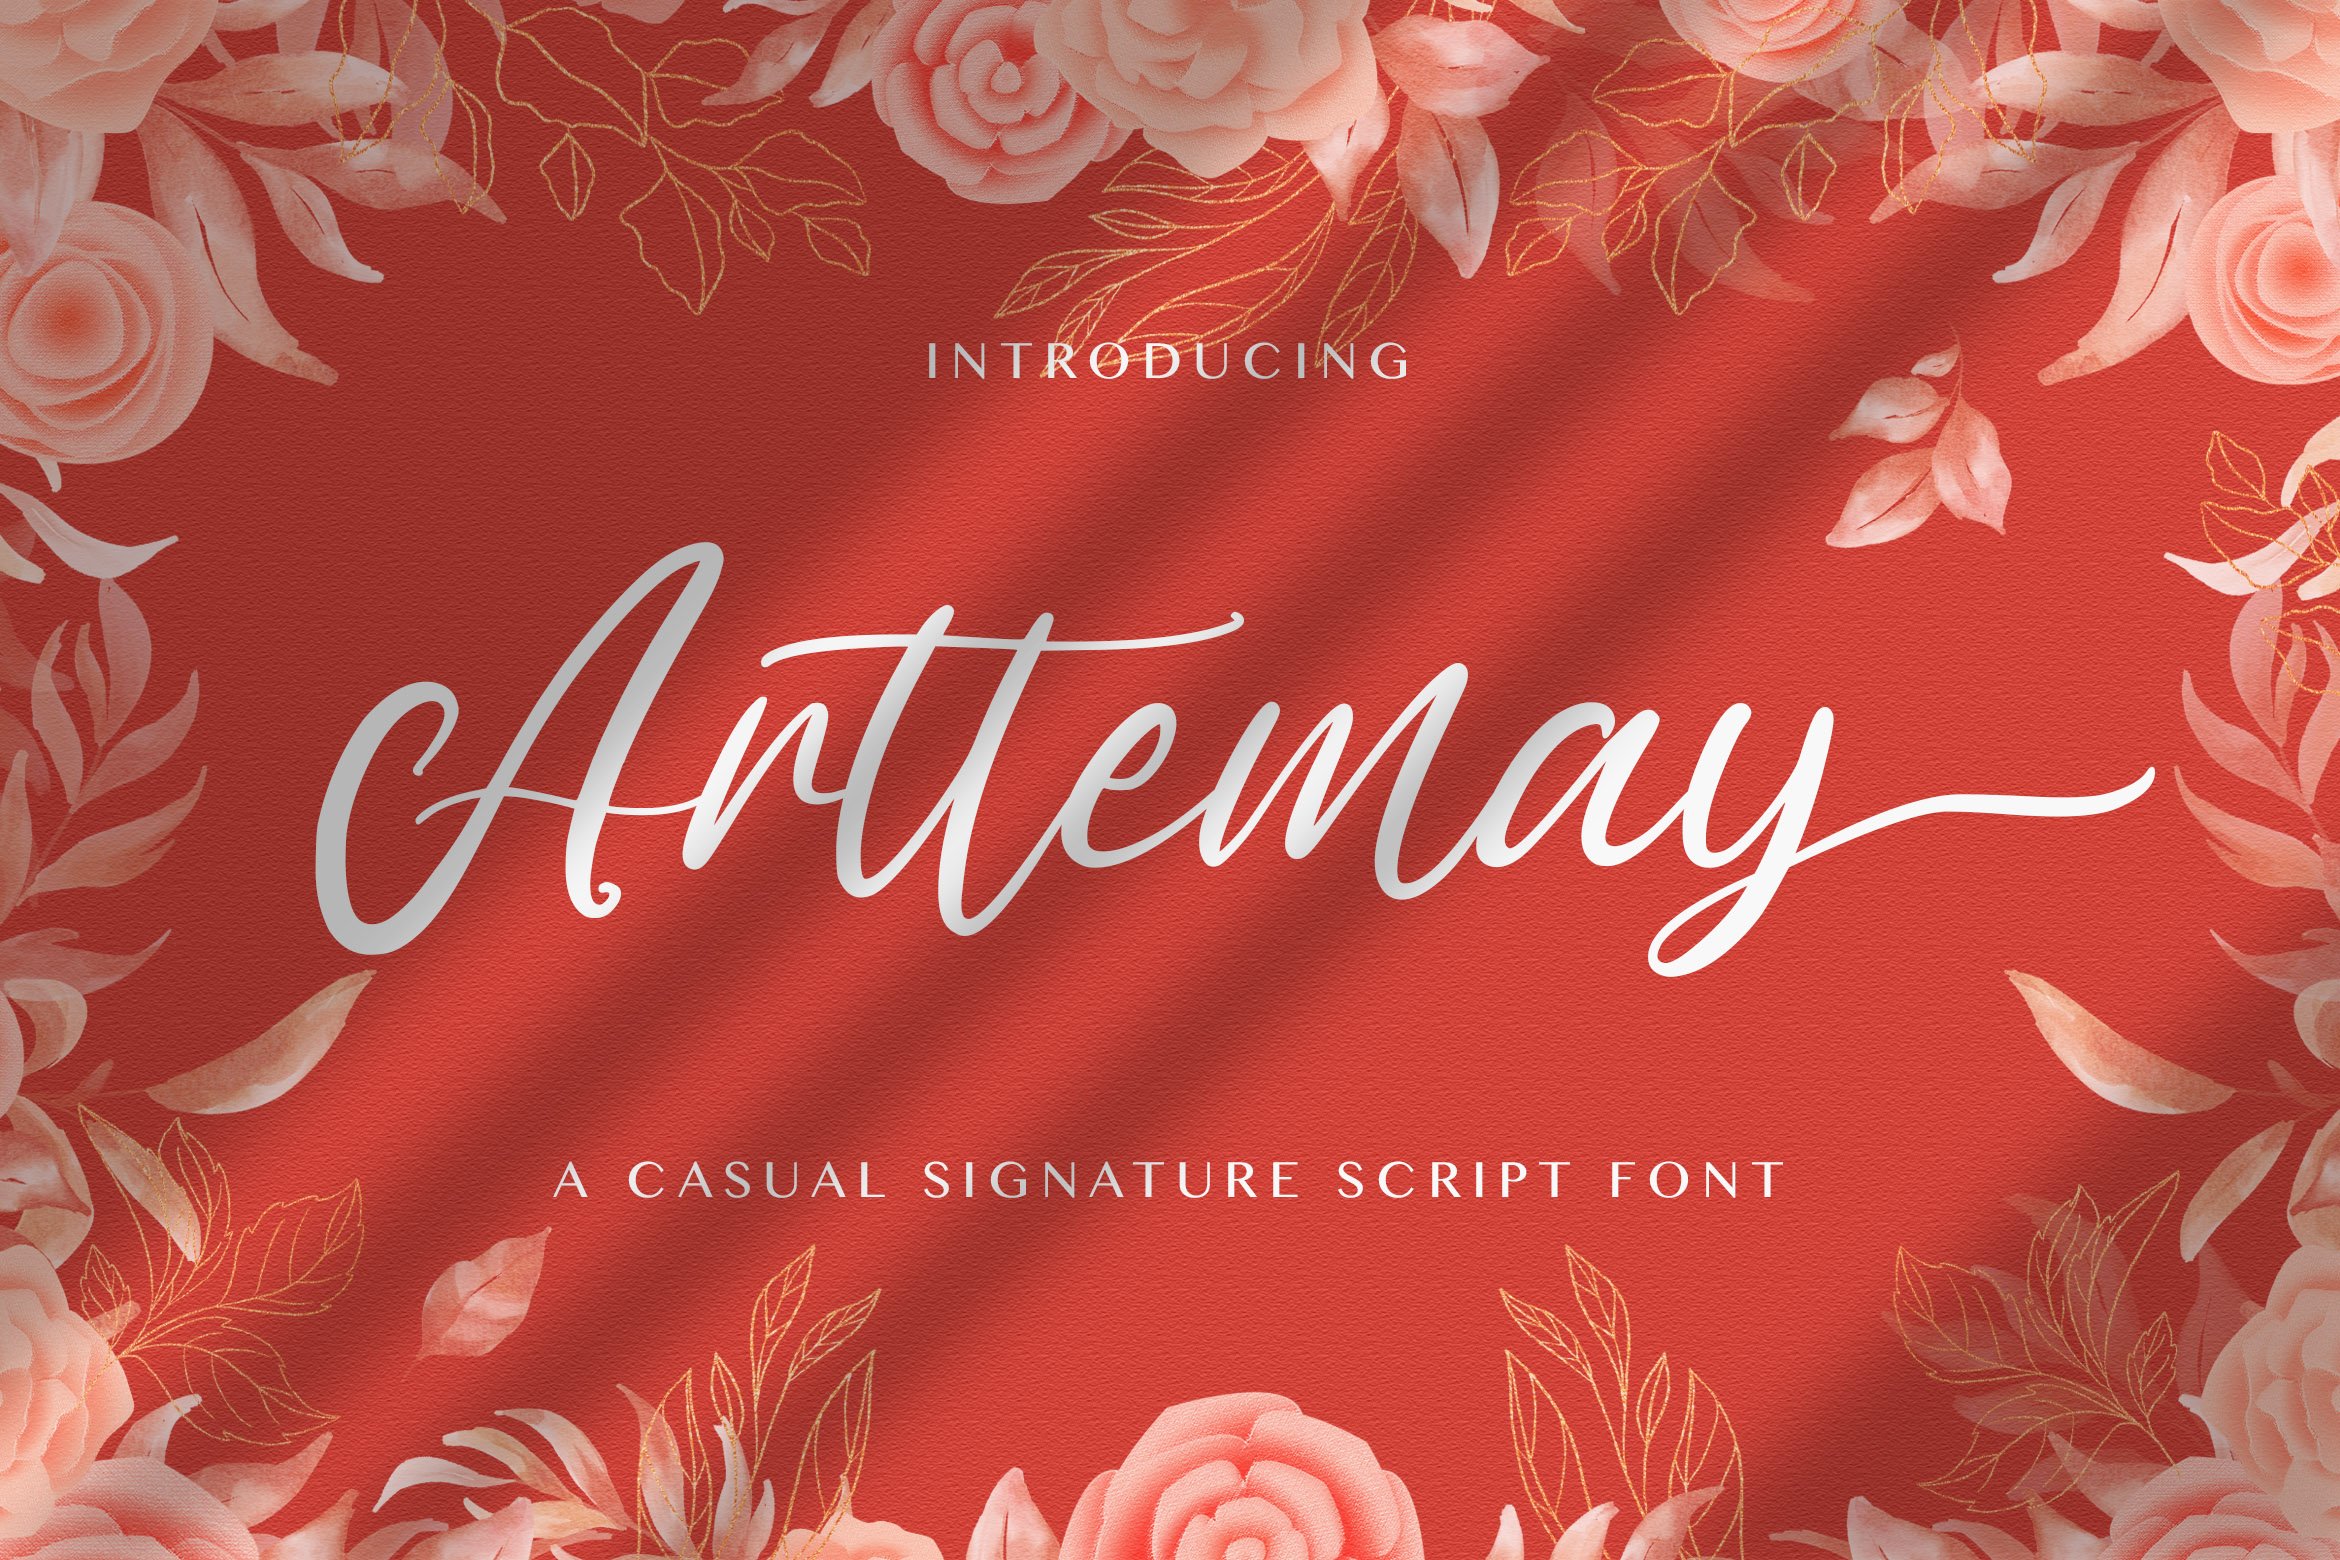 Arttemay - Handwritten Font cover image.